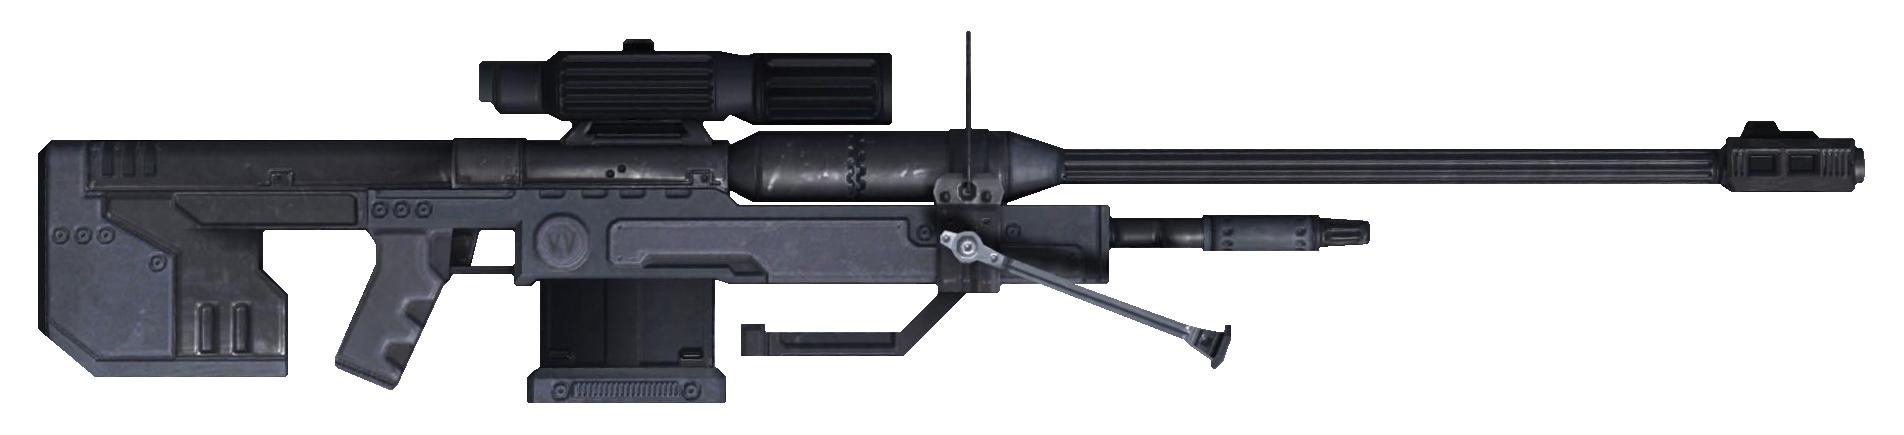 Sniper Rifle #7